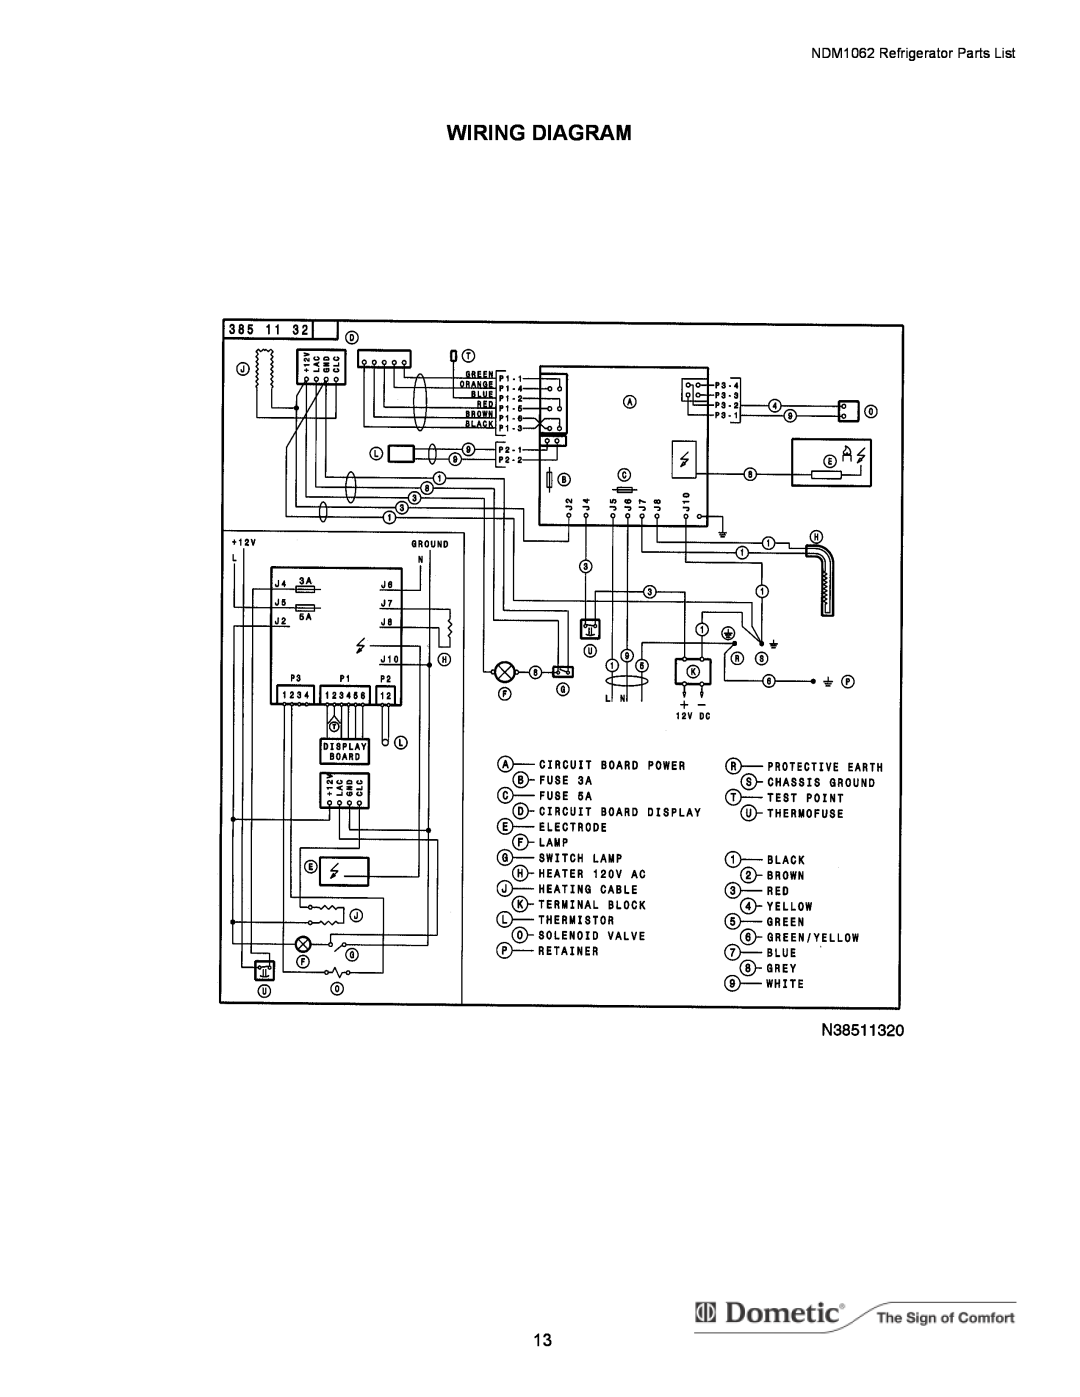 Dometic manual Wiring Diagram, NDM1062 Refrigerator Parts List 